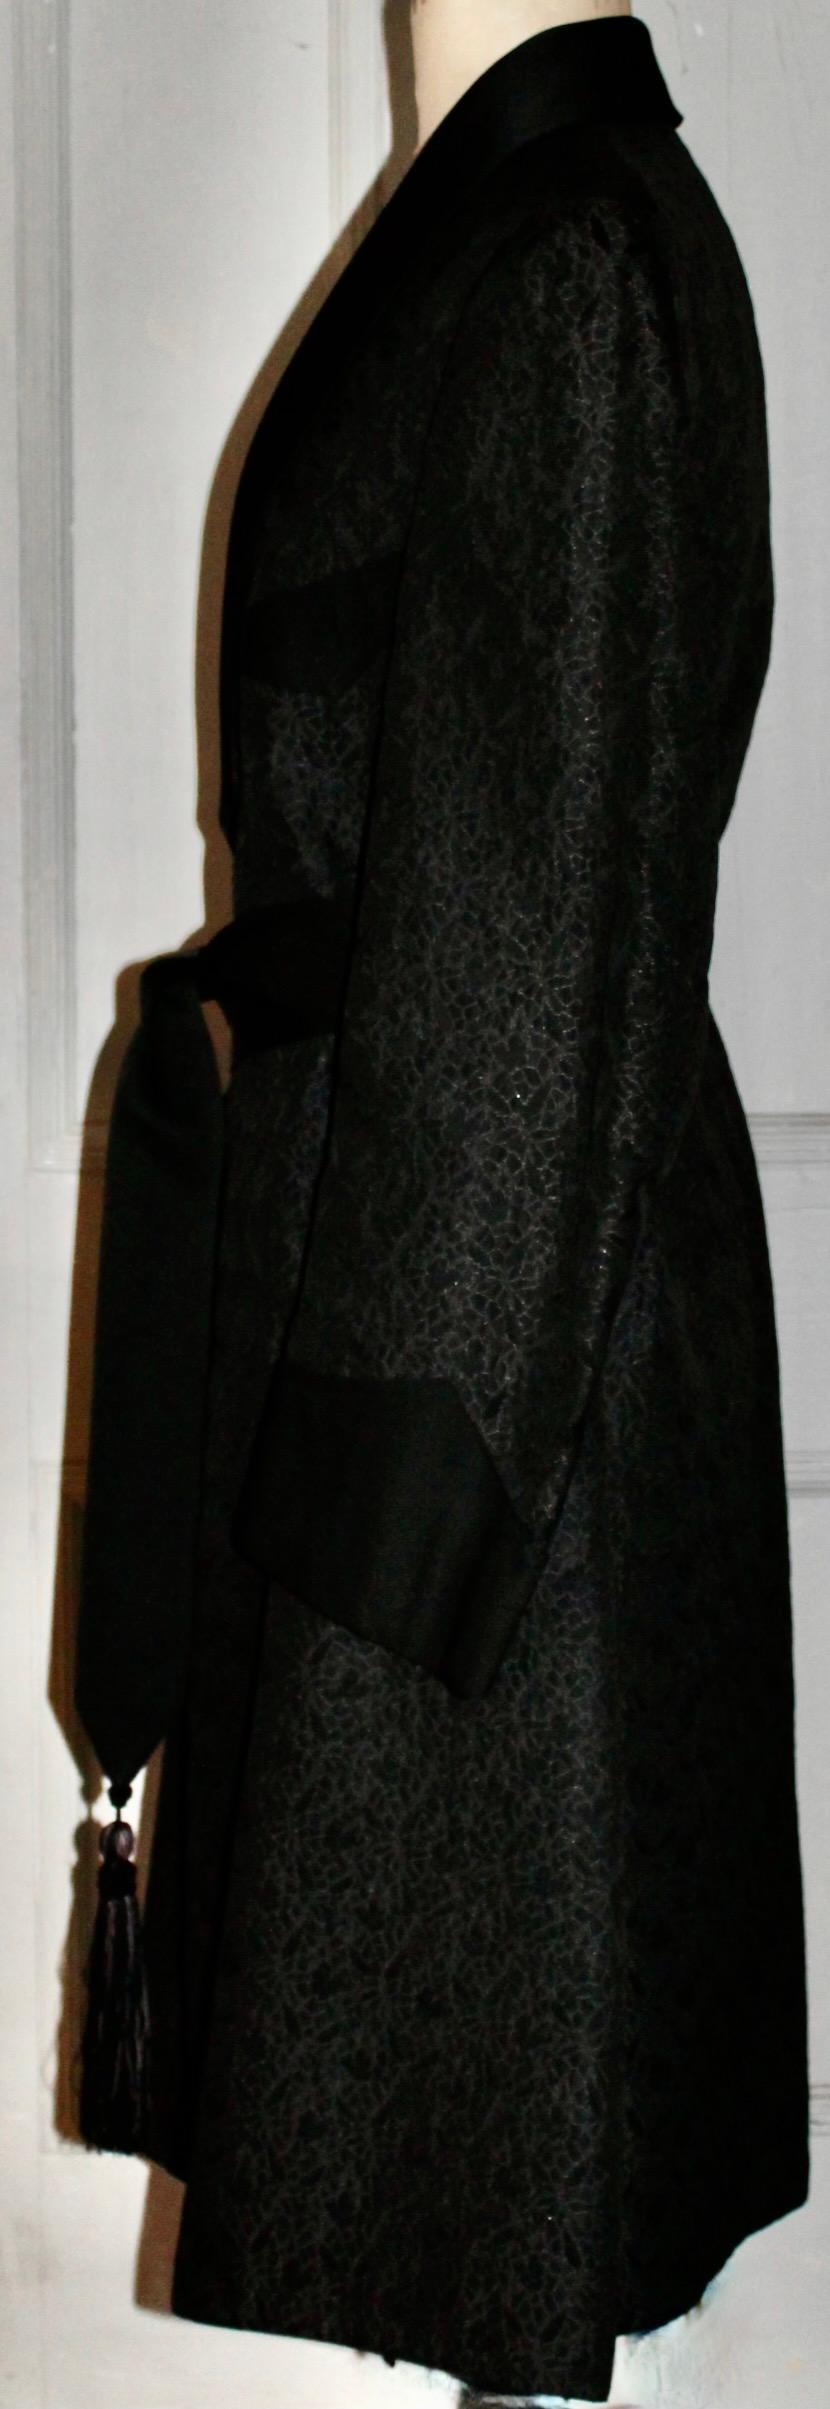 Berkey Merwin Silk Brocade Smoking Coat 1923 For Sale 3